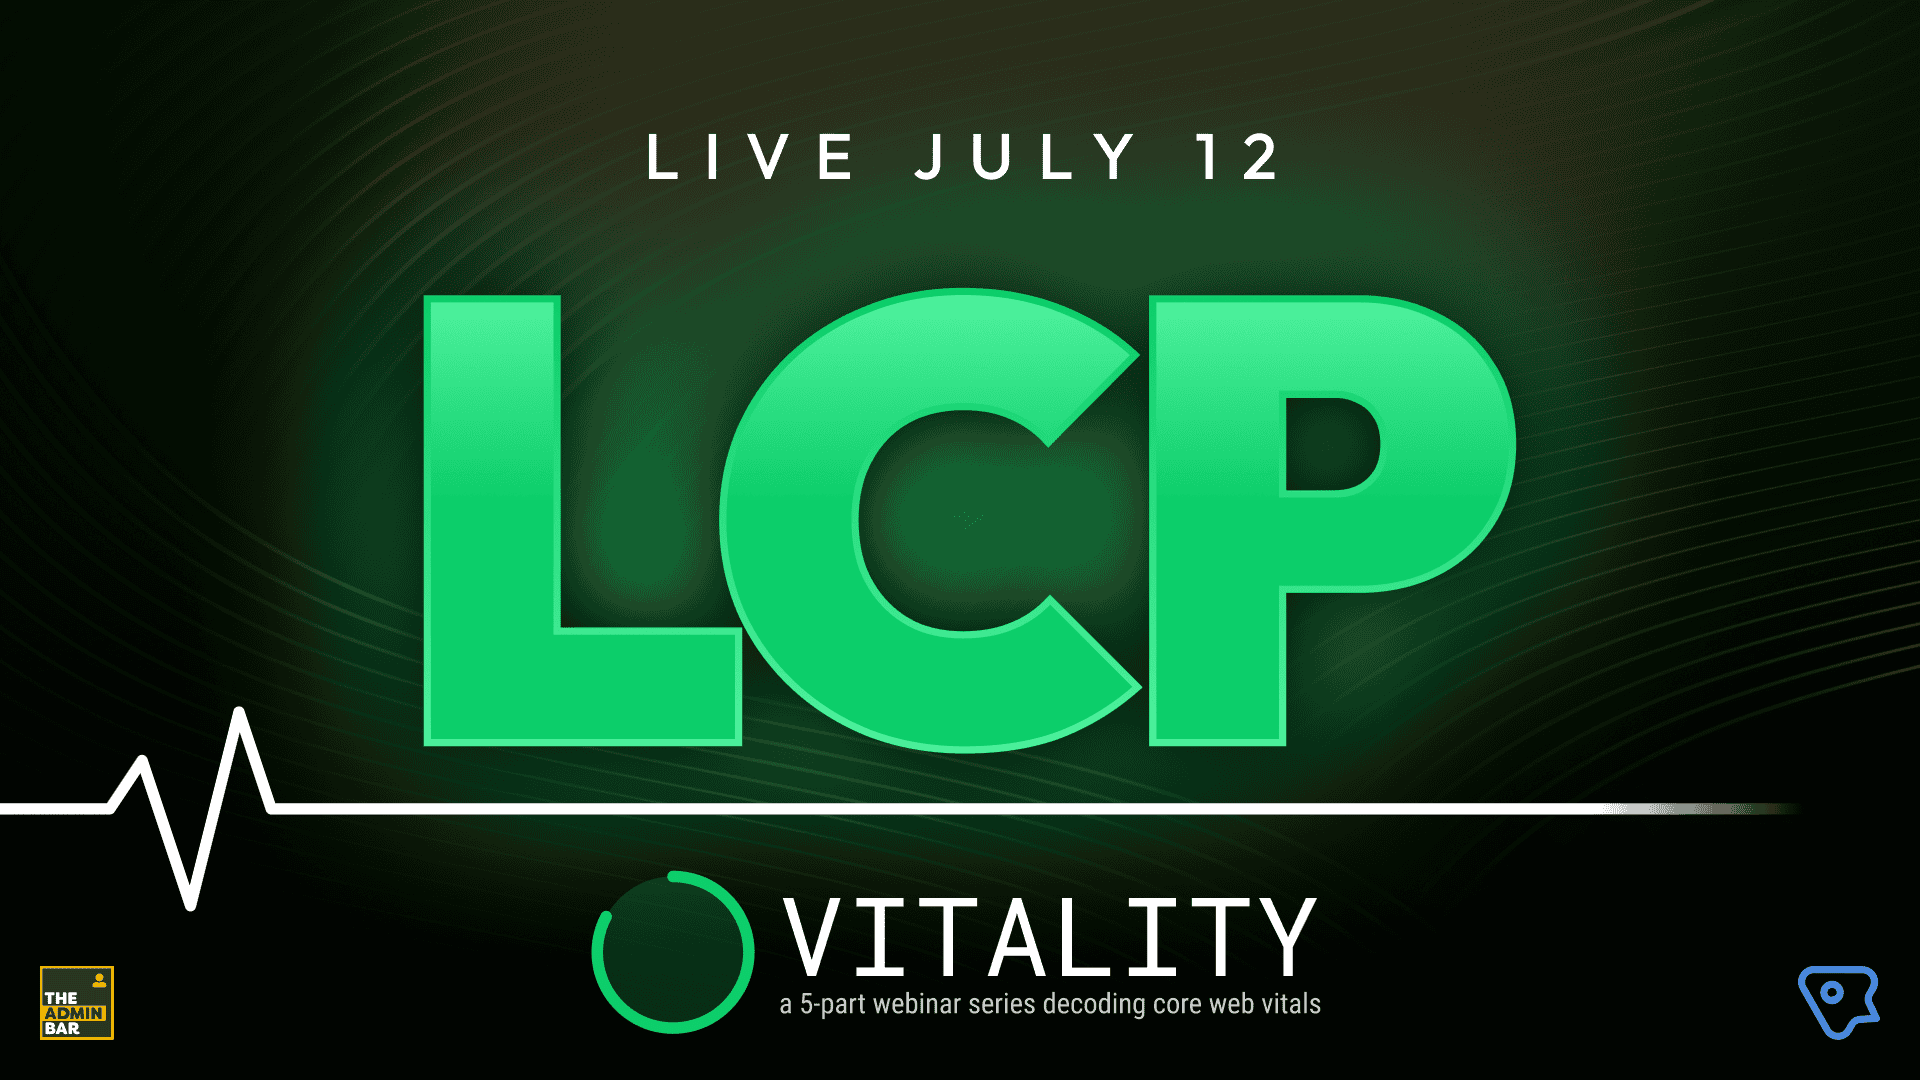 Vitality Lcp